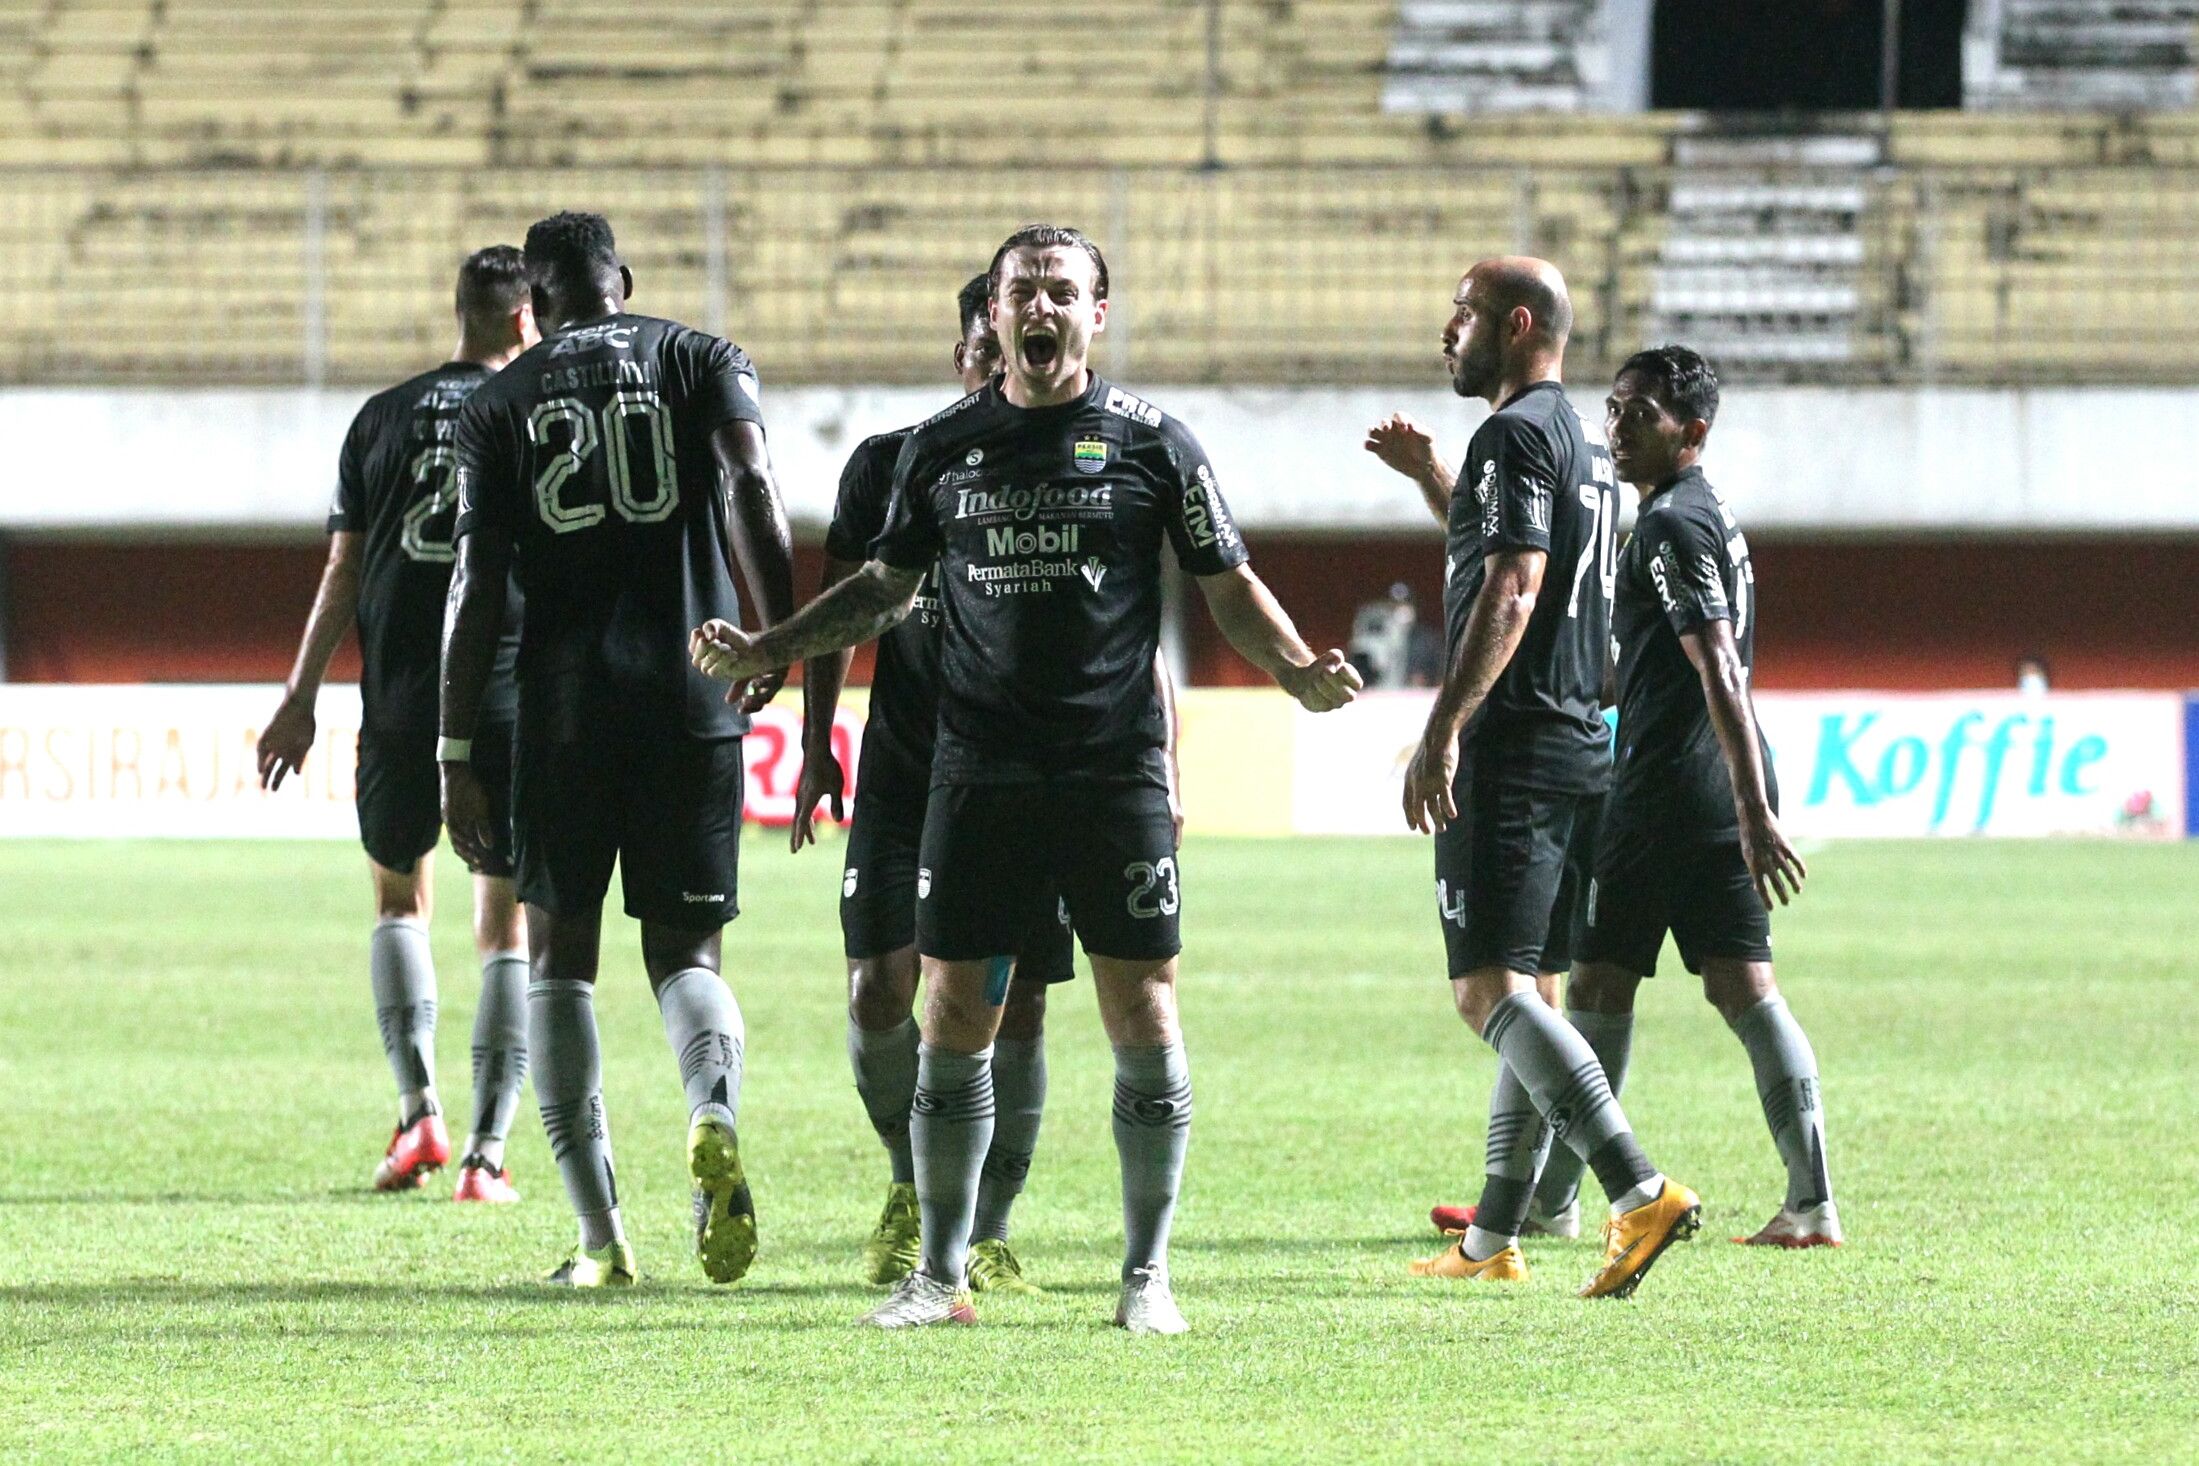 Hasil Babak 1 Persiraja Vs Persib, Luar Biasa Maung Bandung Unggul 3-0